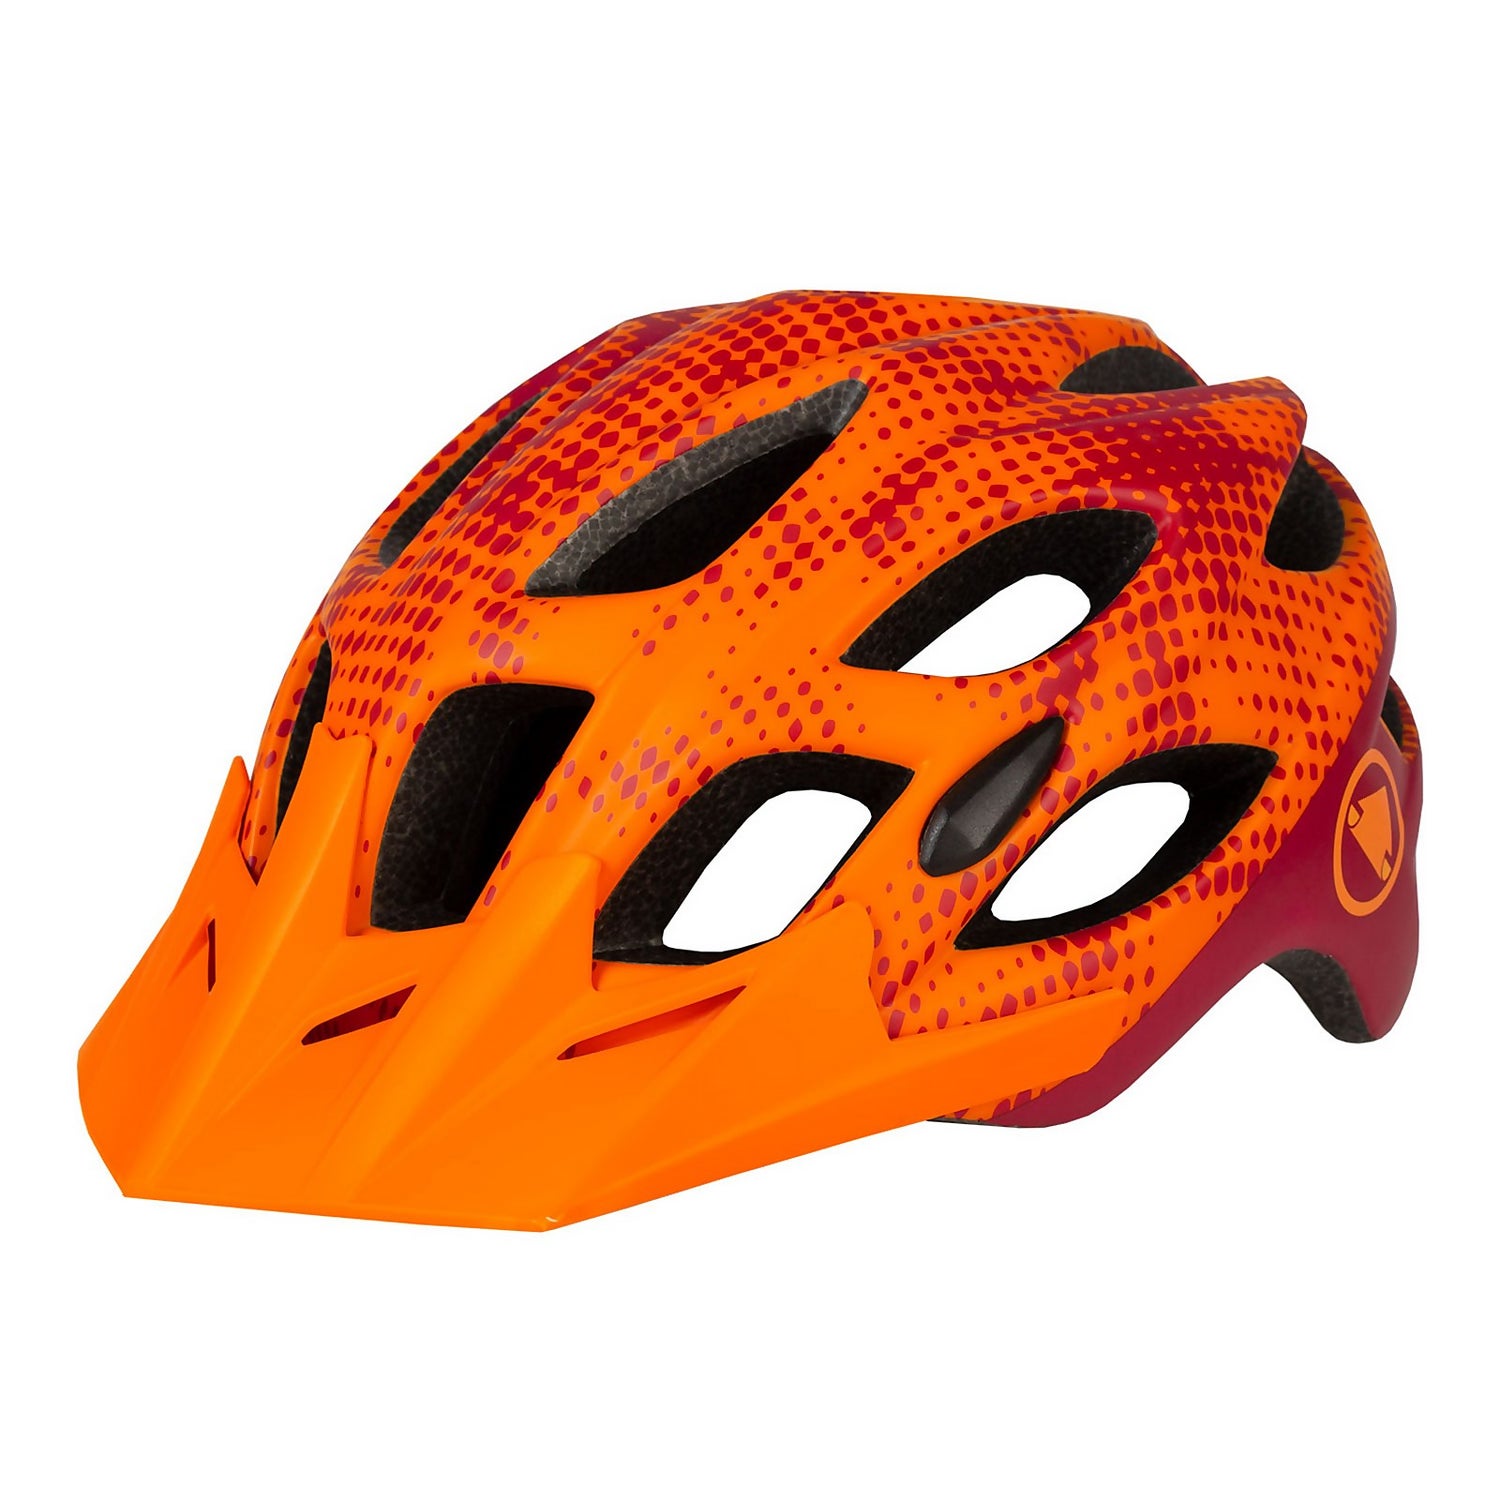 Hummvee Youth Helmet - Tangerine - One Size